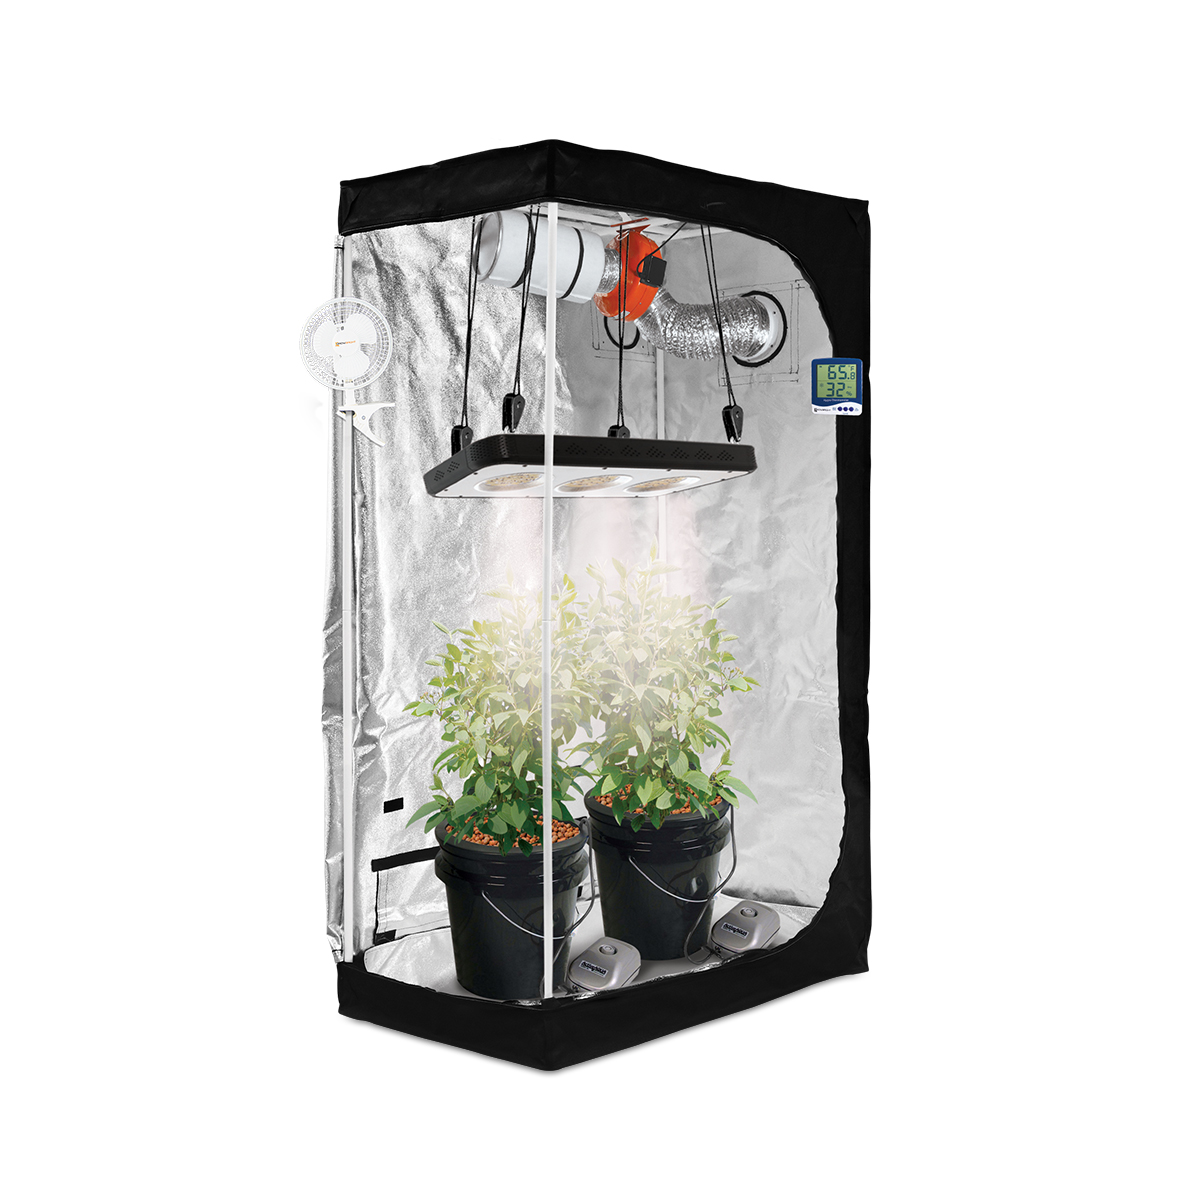 https://www.htgsupply.com/wp-content/uploads/2019/02/htg-small-2x3-hydroponic-led-grow-tent-kit.jpg